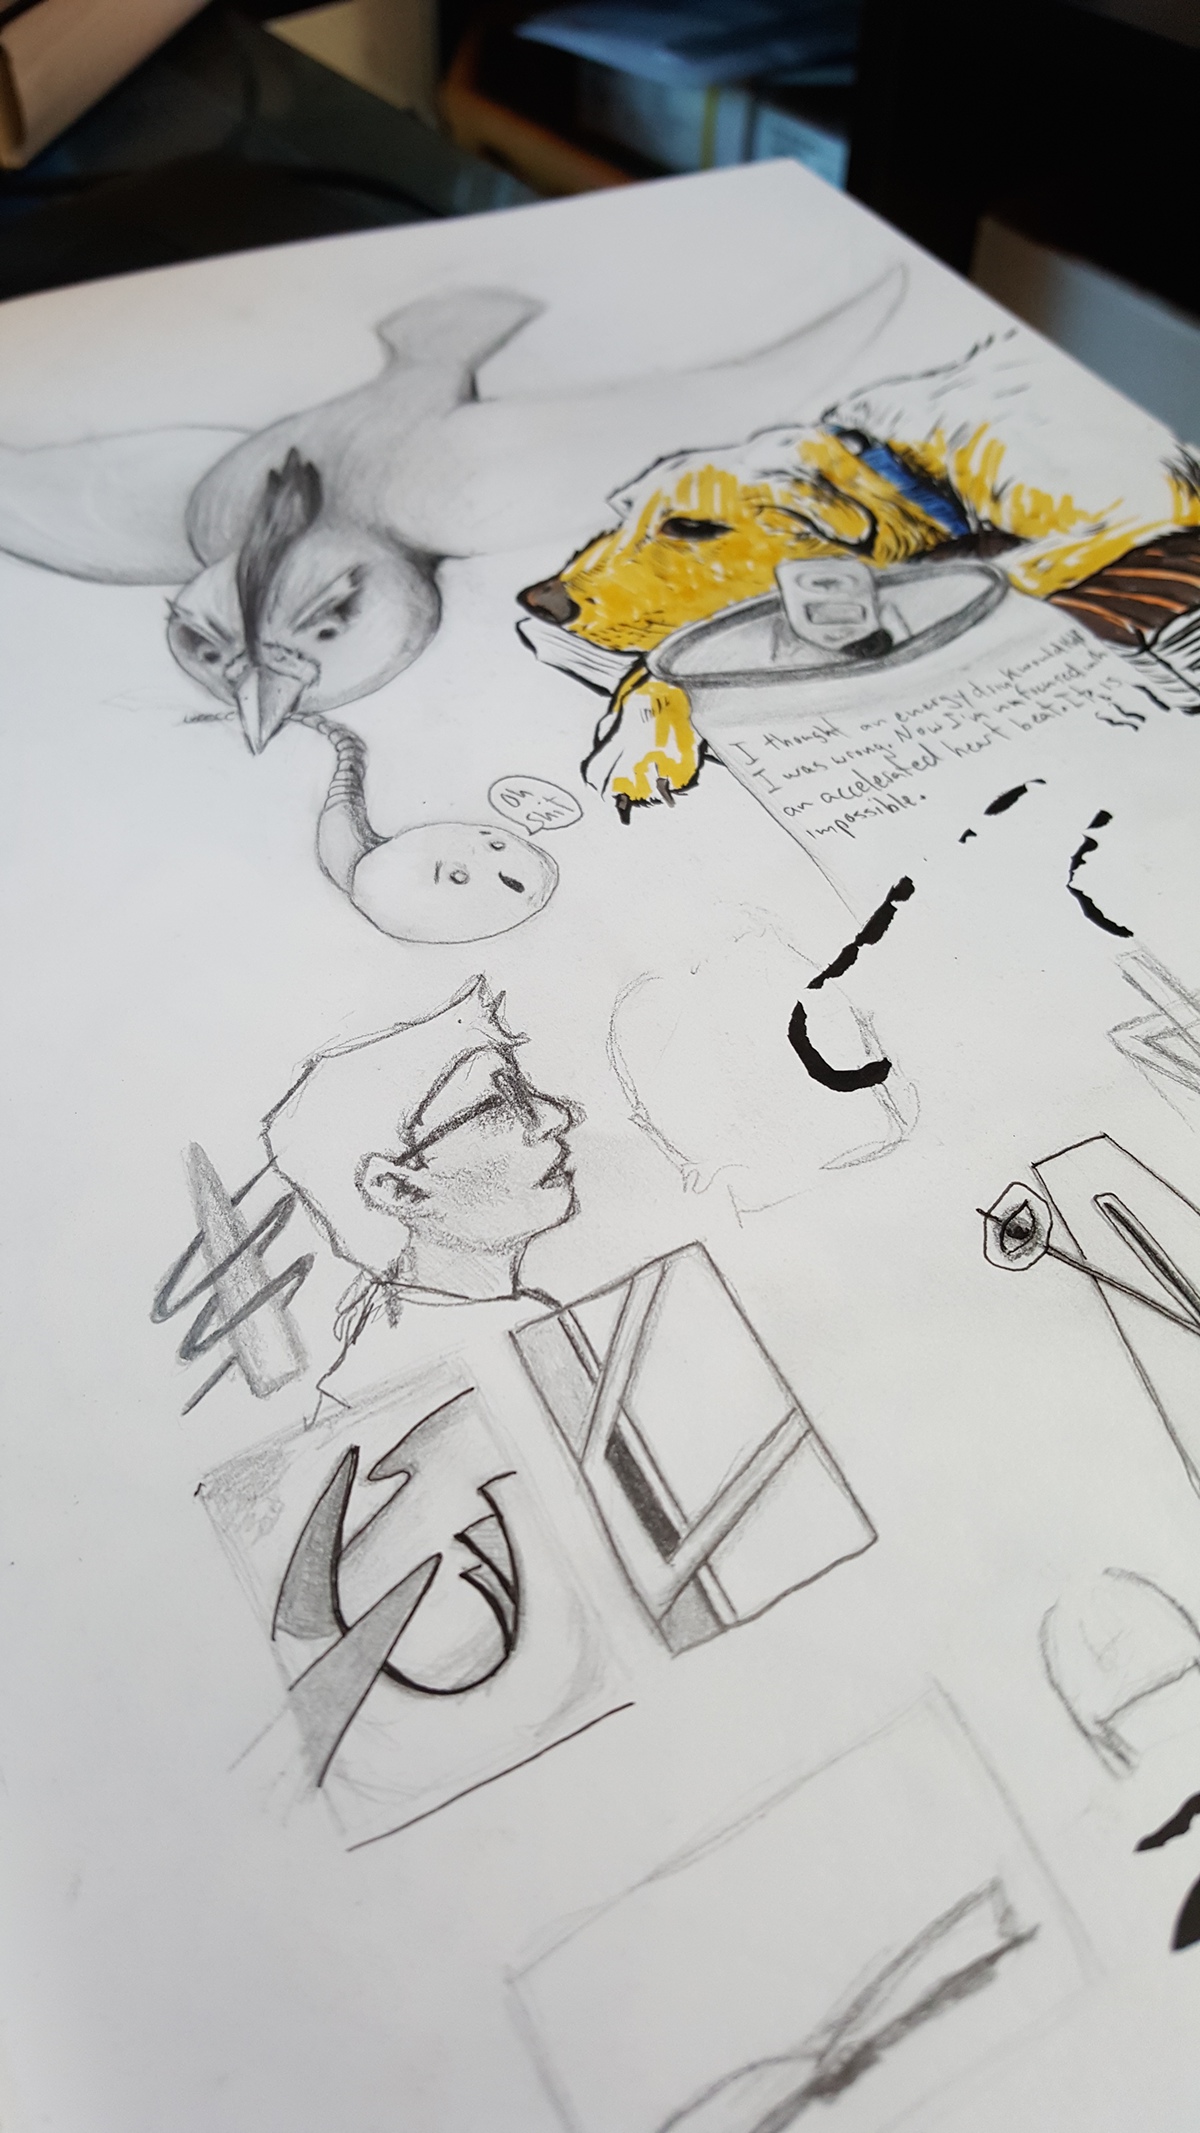 Adobe Portfolio sketchbook experiments Fun exploring characters pen ink graphite paint acrylic watercolor gouache process sketches Stillman and Birn